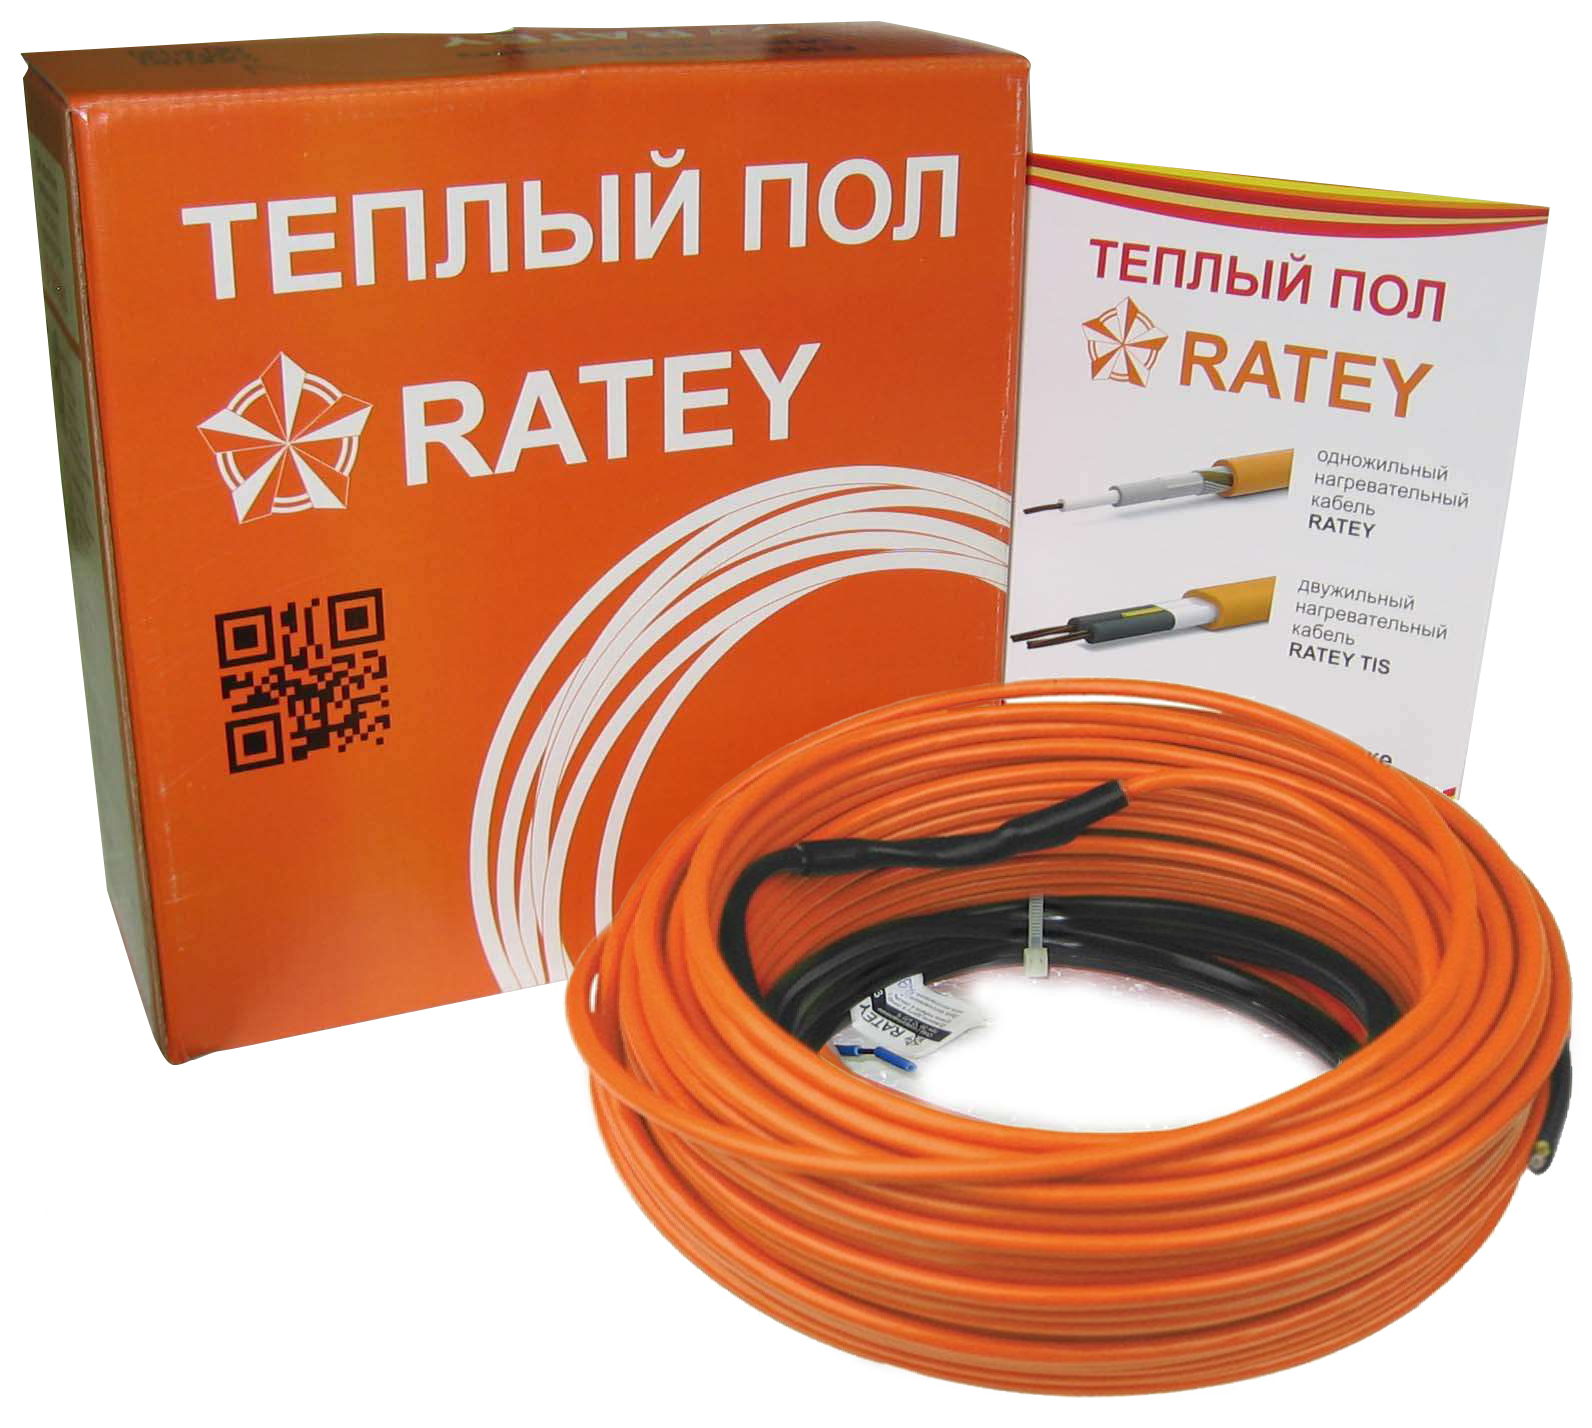 Електрична тепла підлога Ratey RD1 0.820